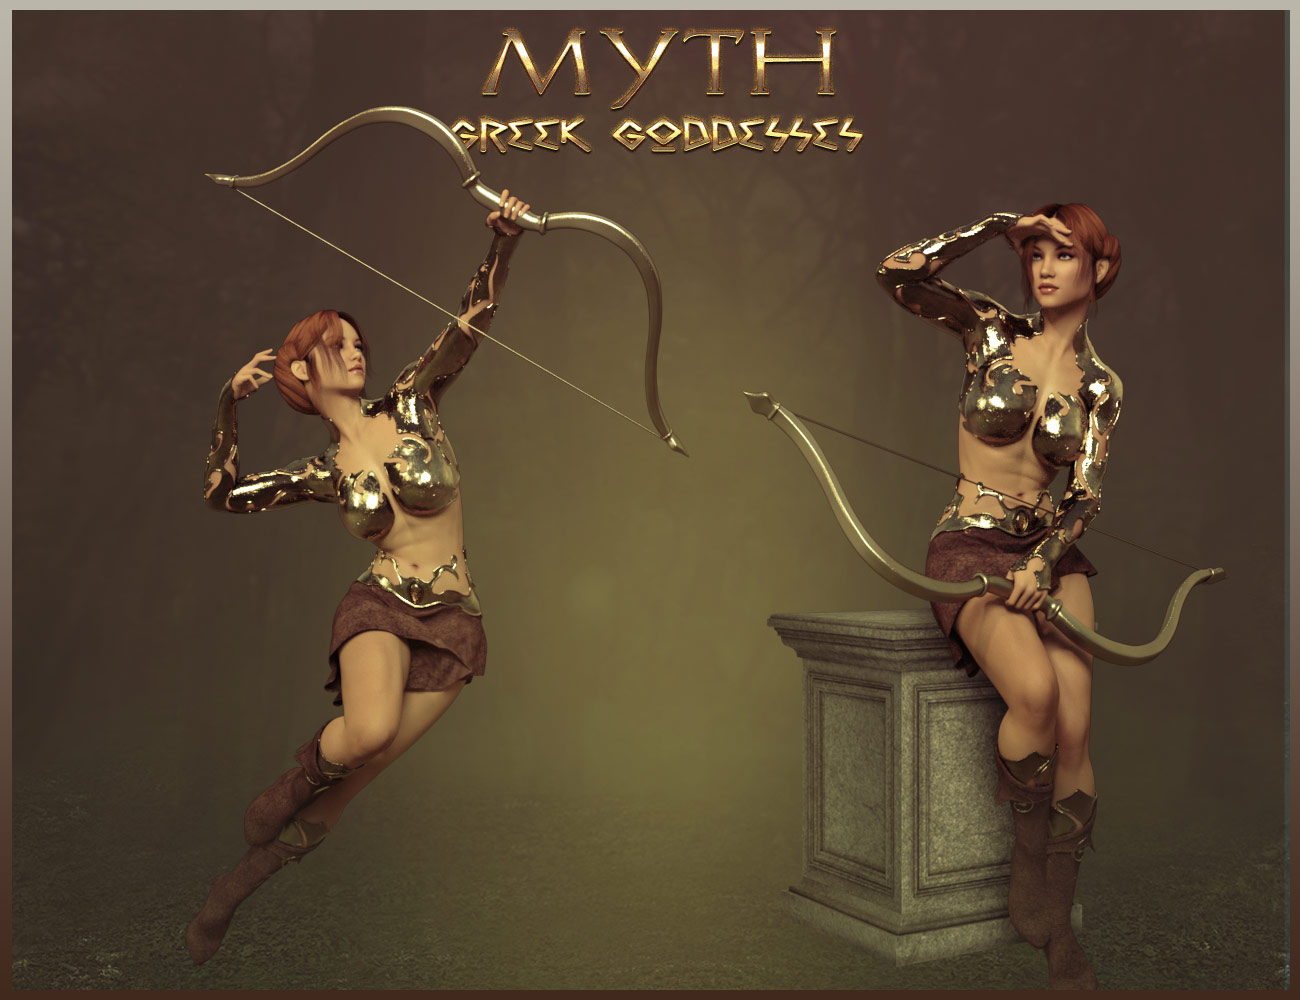 MYTH - Greek Goddesses Poses by: ilona, 3D Models by Daz 3D